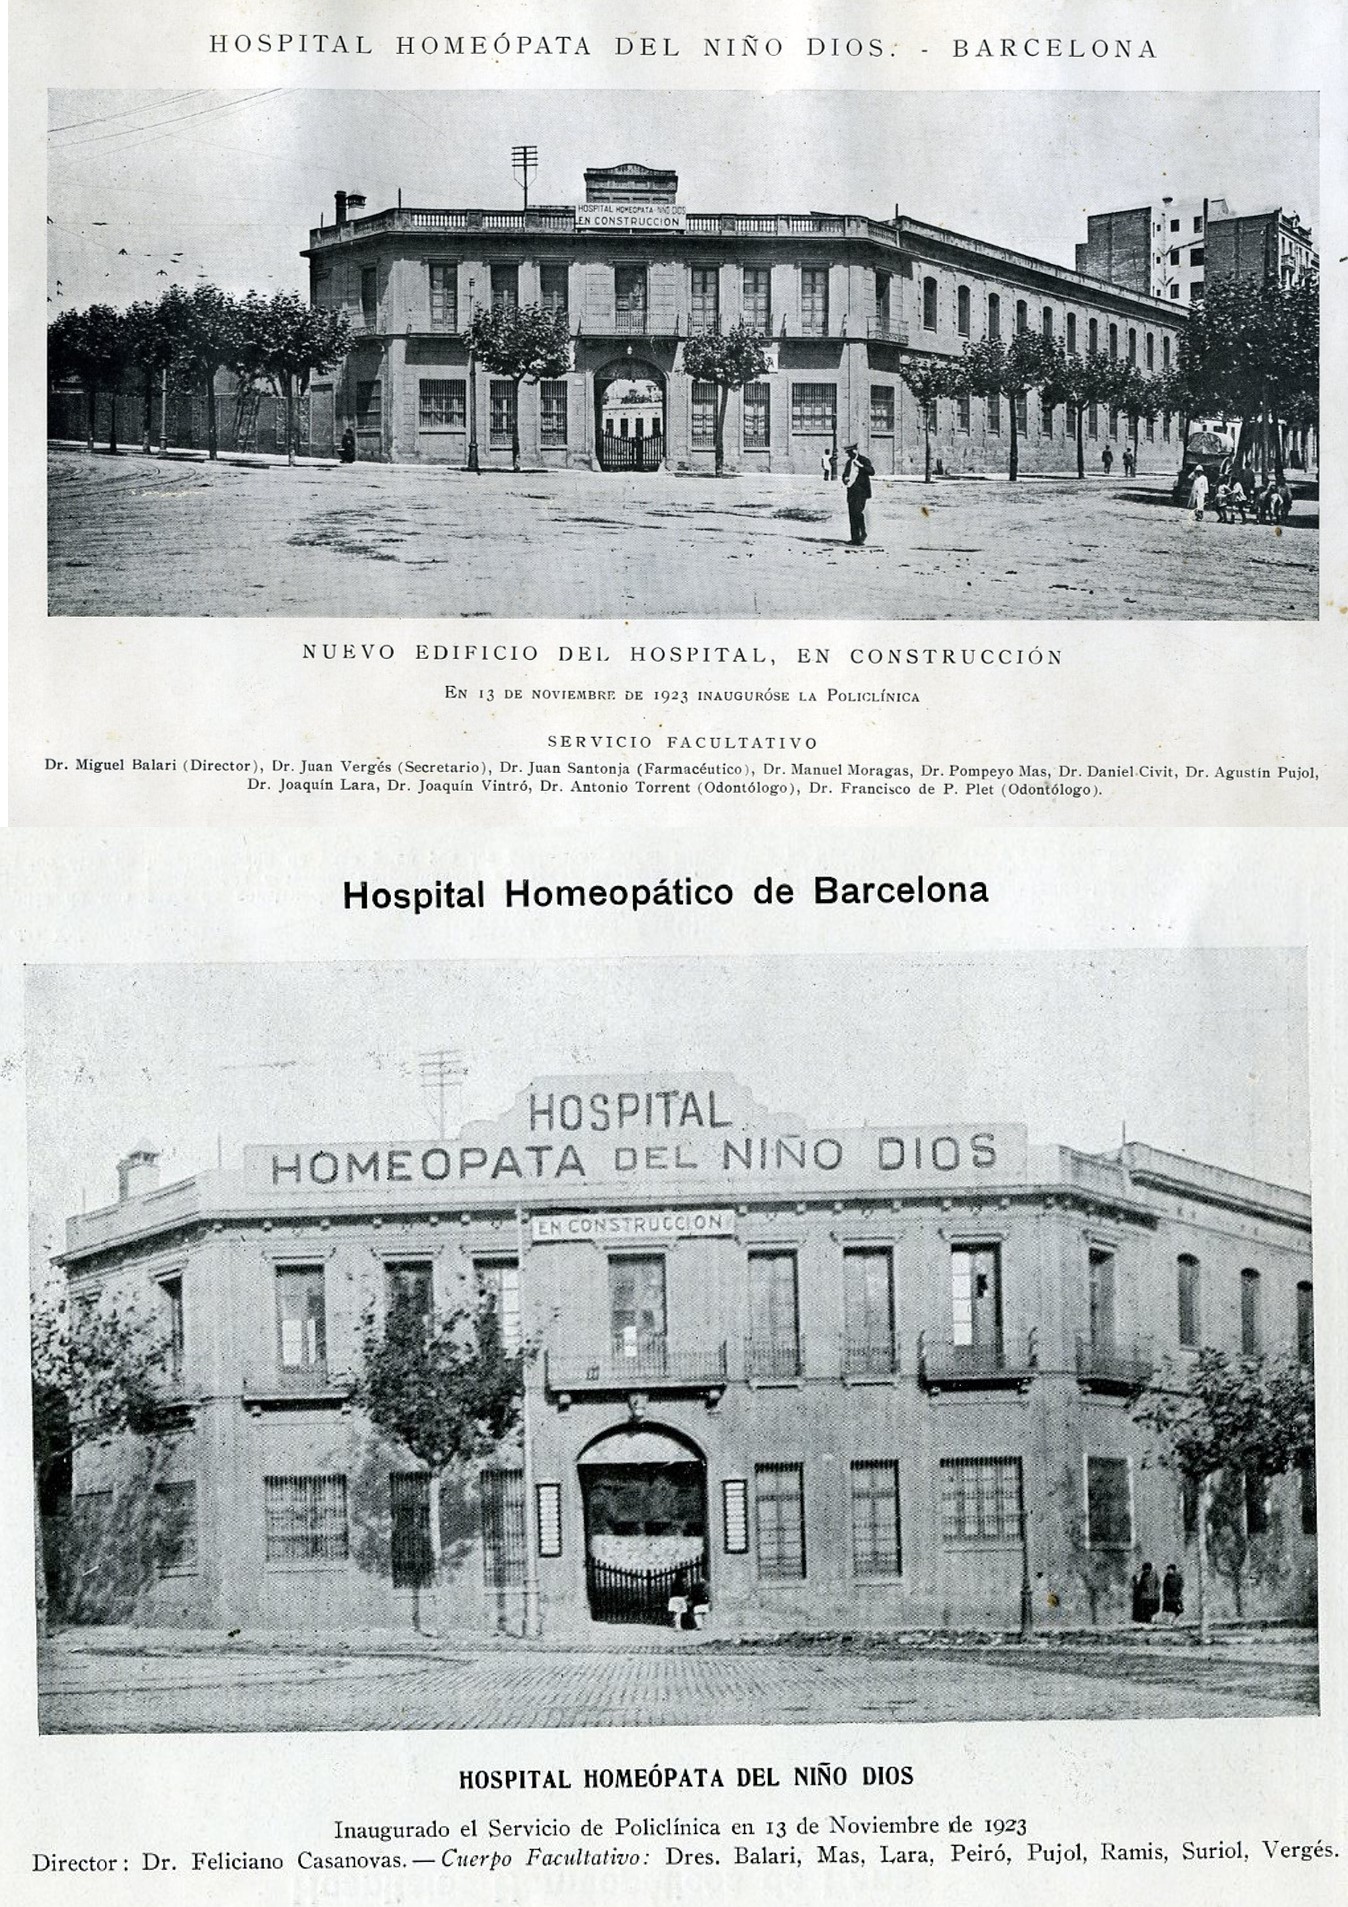 Hospital Homeopata del Ninño Dios 1925-1928